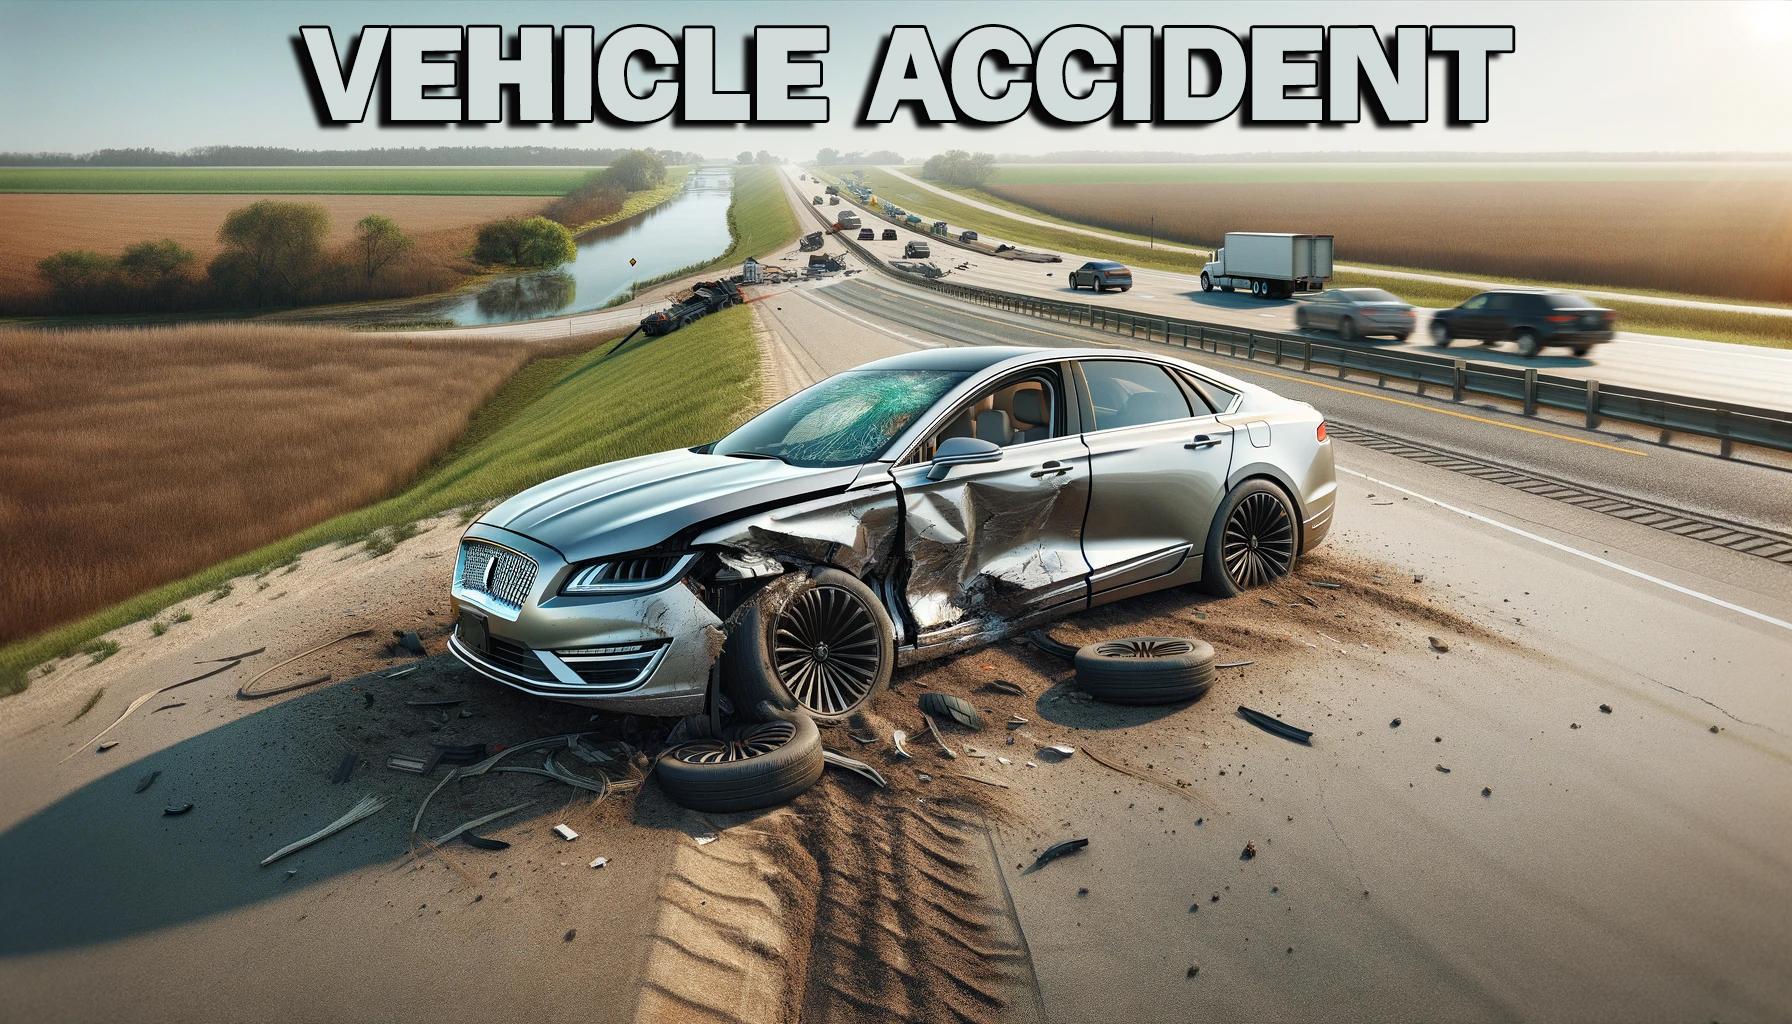 Vehicle accident or vehicle crash news graphic